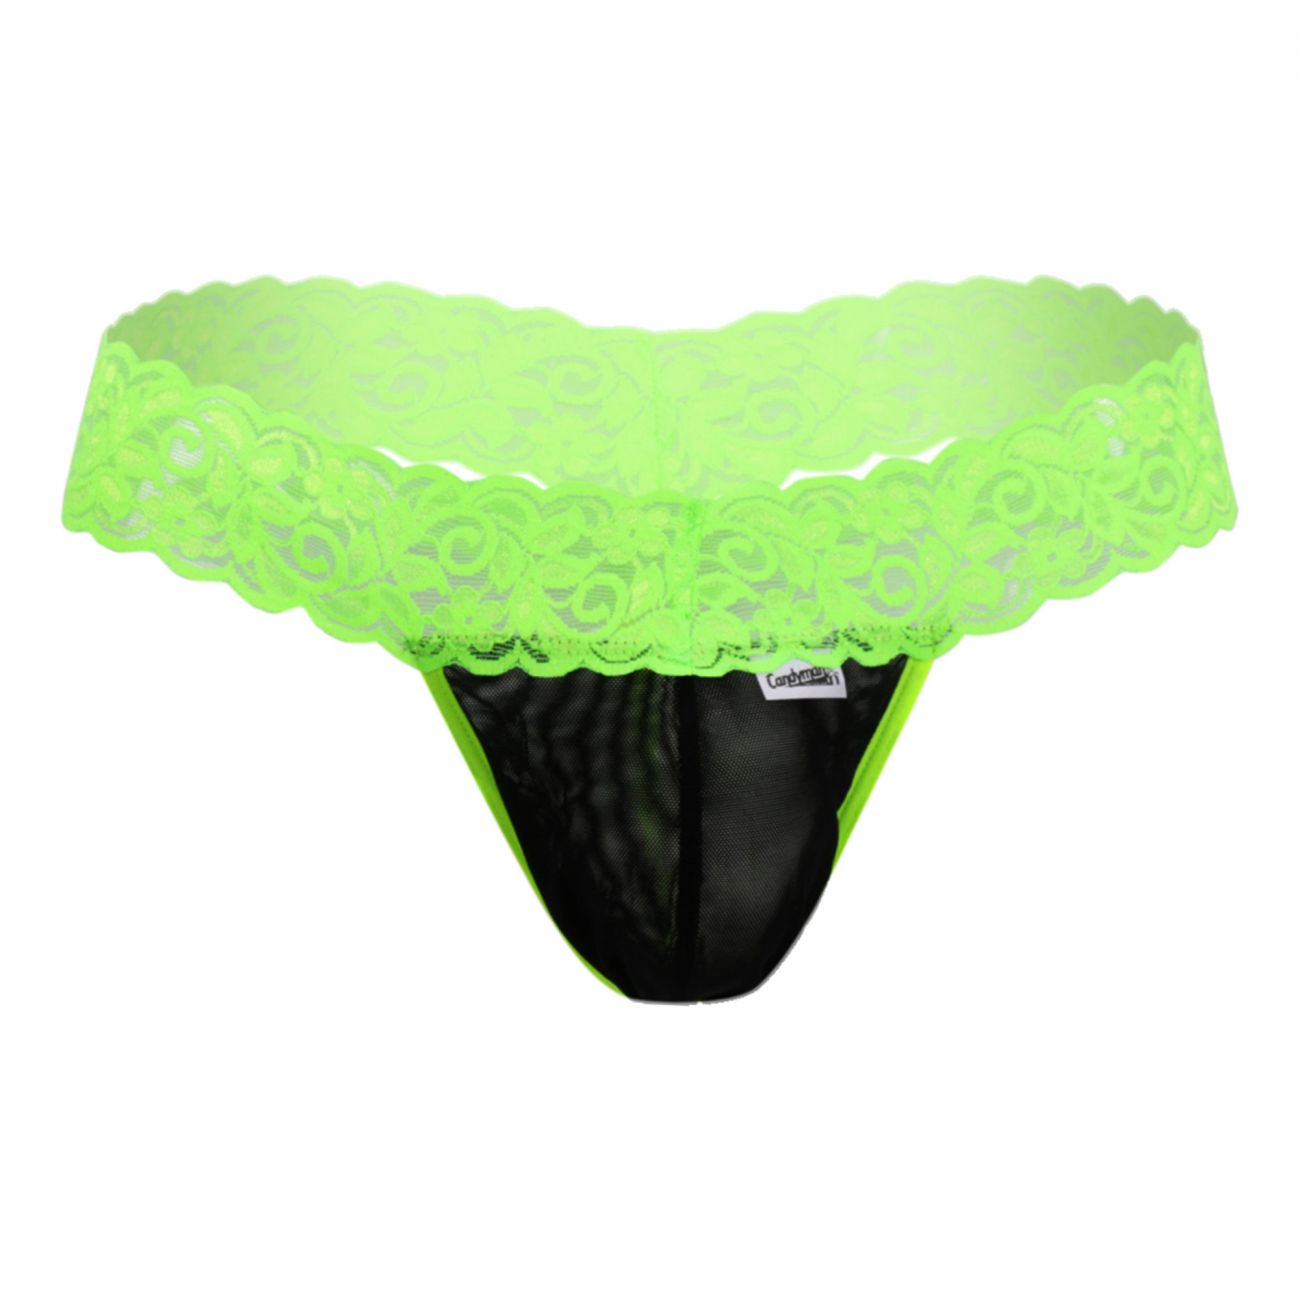 JCSTK - CandyMan 99370X Alluring Thongs Hot Green Plus Sizes